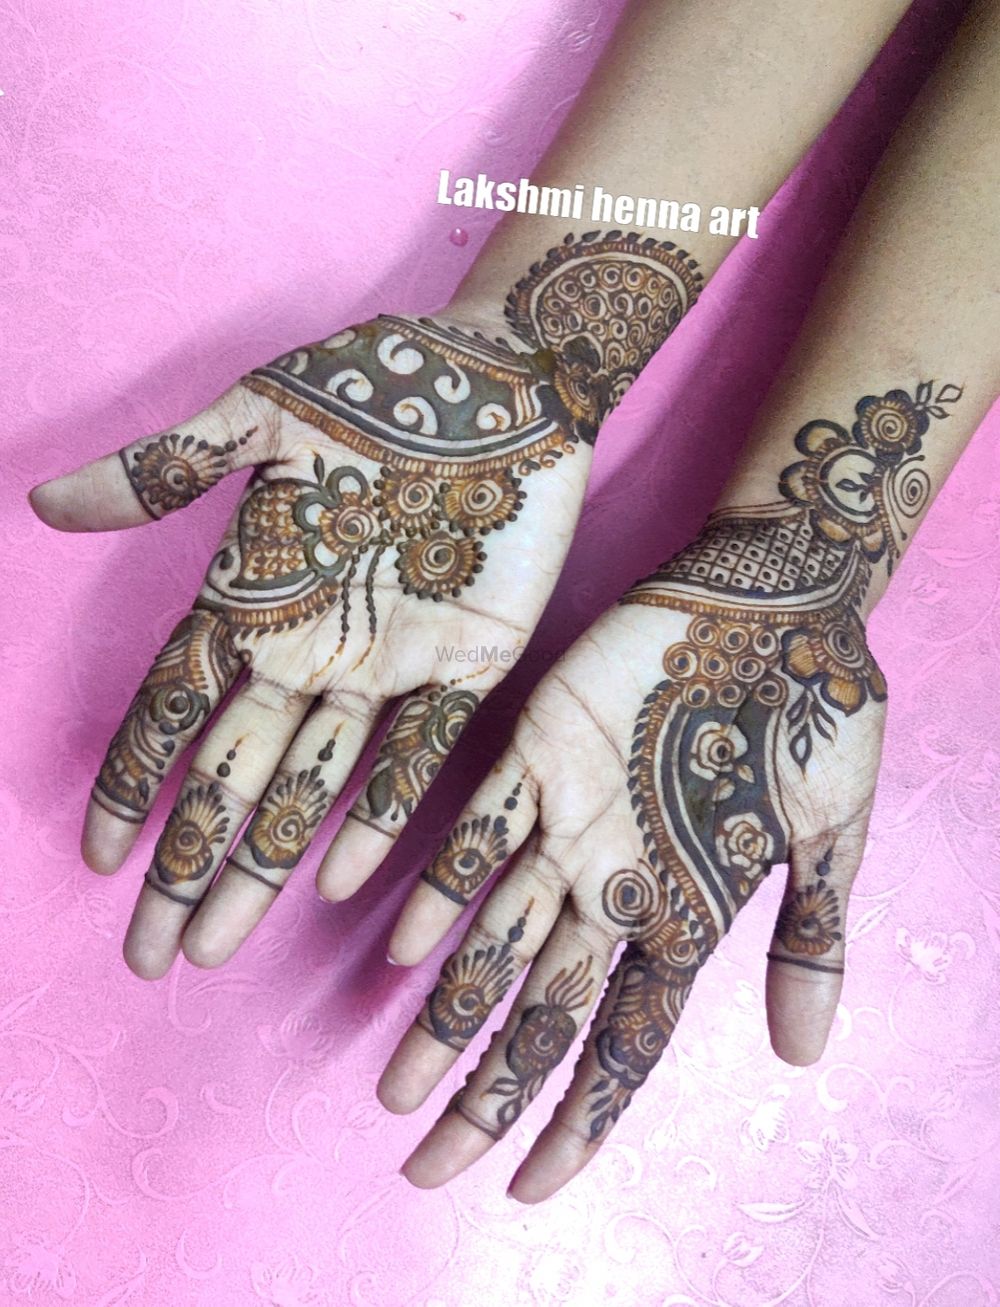 Photo From Arabian style - By Lakshmi Henna Art